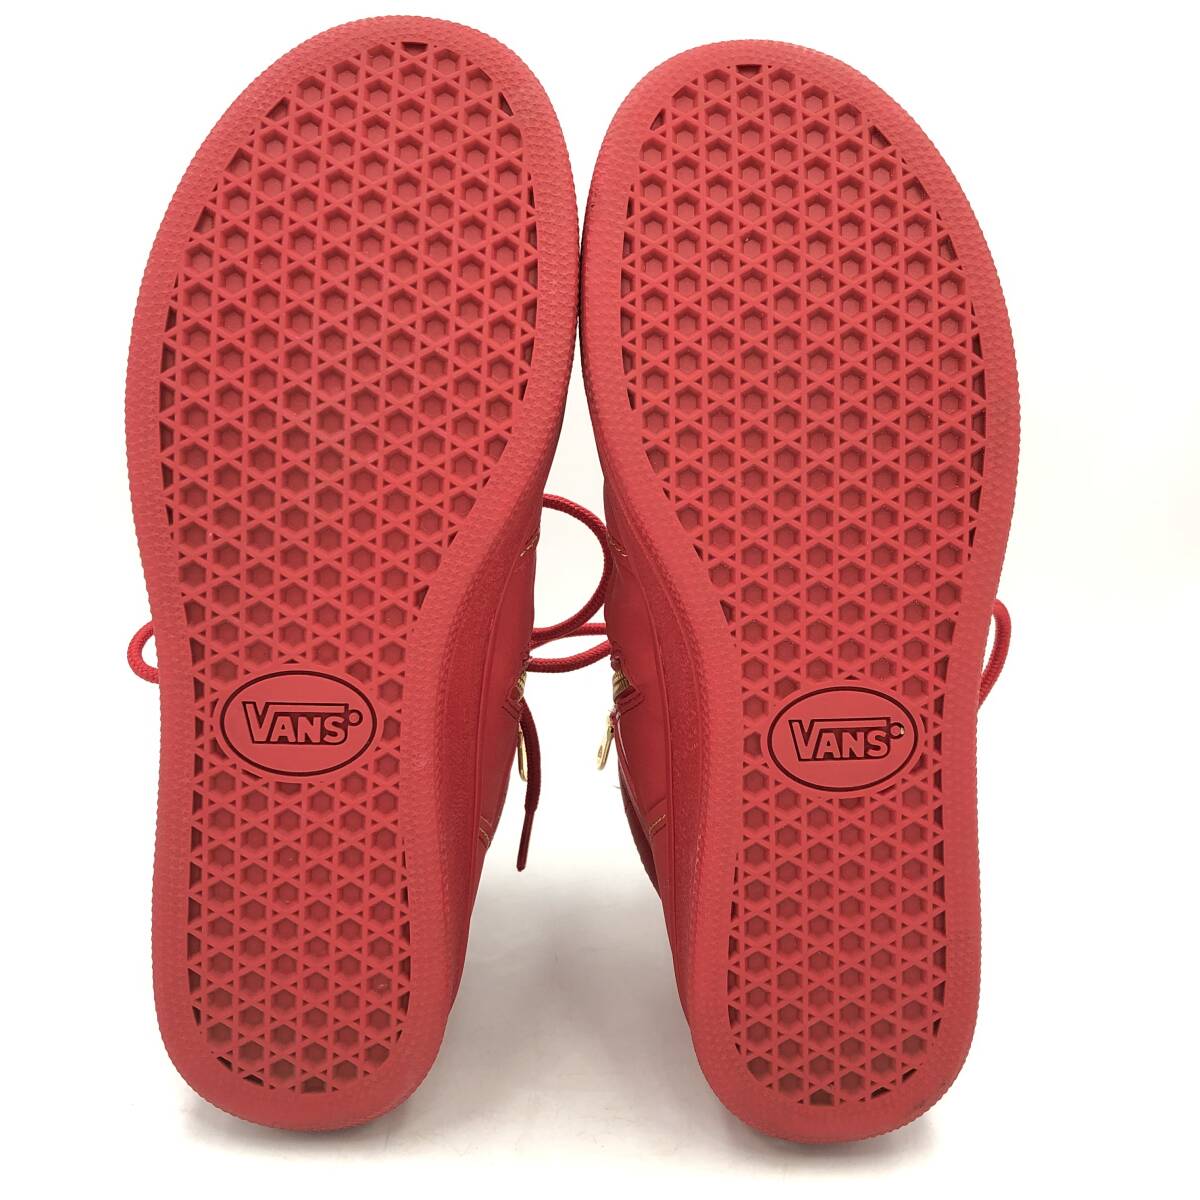 ★27cm【VANS】ハイカットスニーカー メンズ レッド 赤色 RED PVC シューズ 靴_画像6